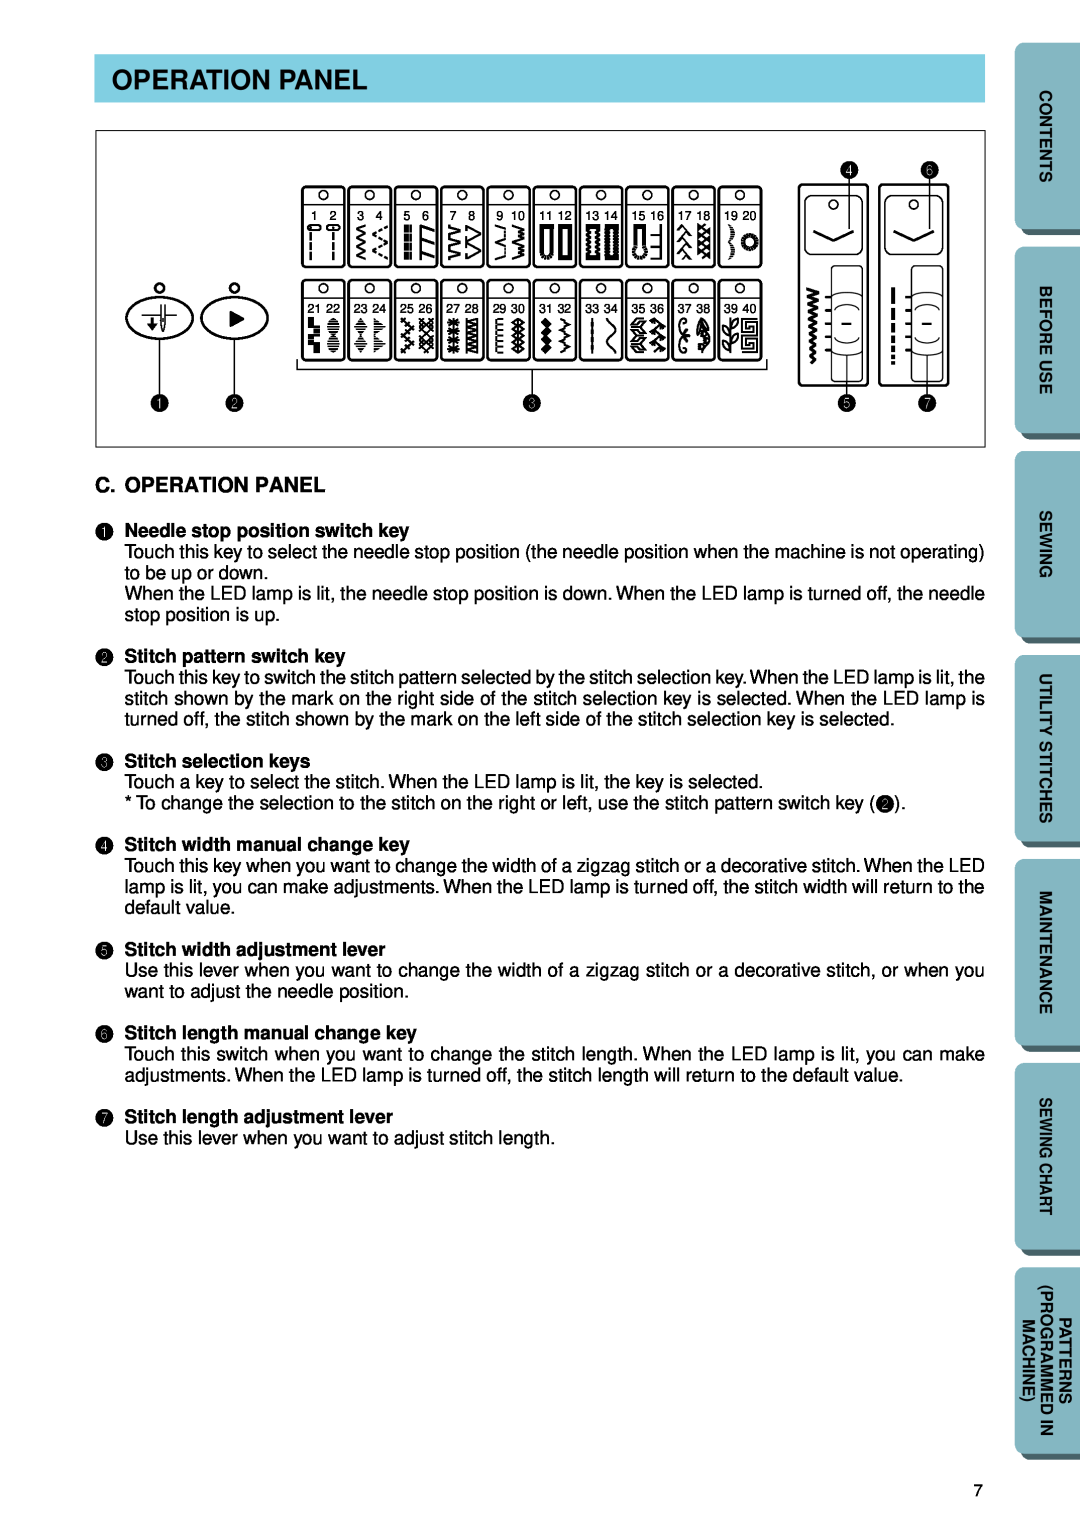 Brother PC-2800 C. Operation Panel, Needle stop position switch key, Stitch pattern switch key, Stitch selection keys 